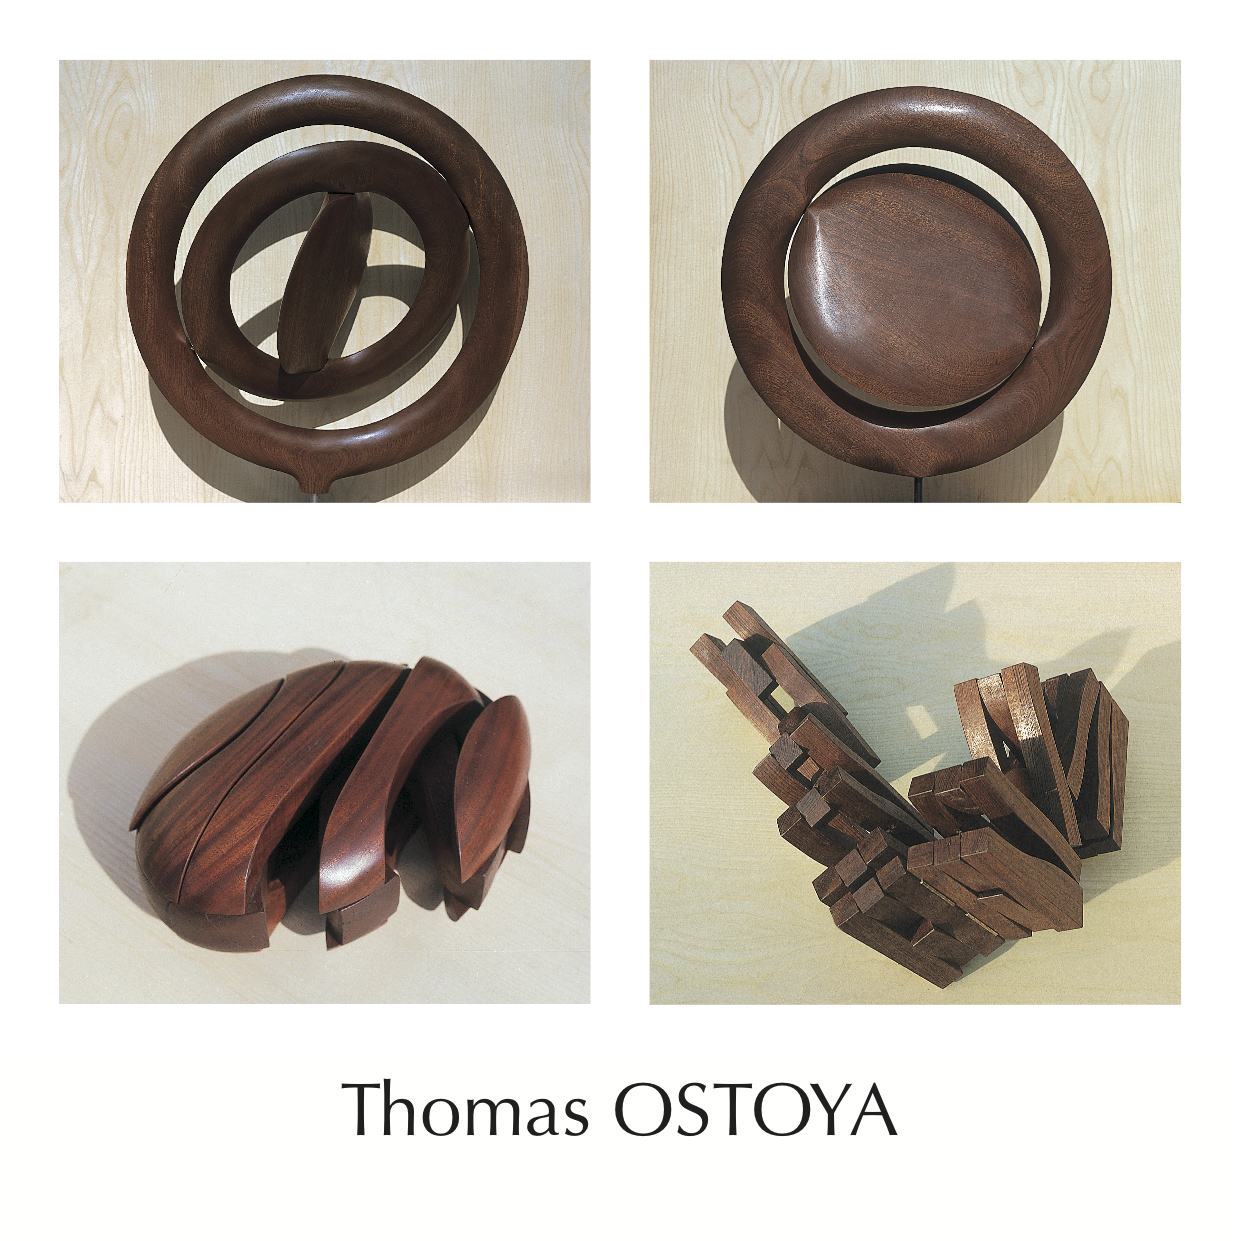 Thomas Ostoya